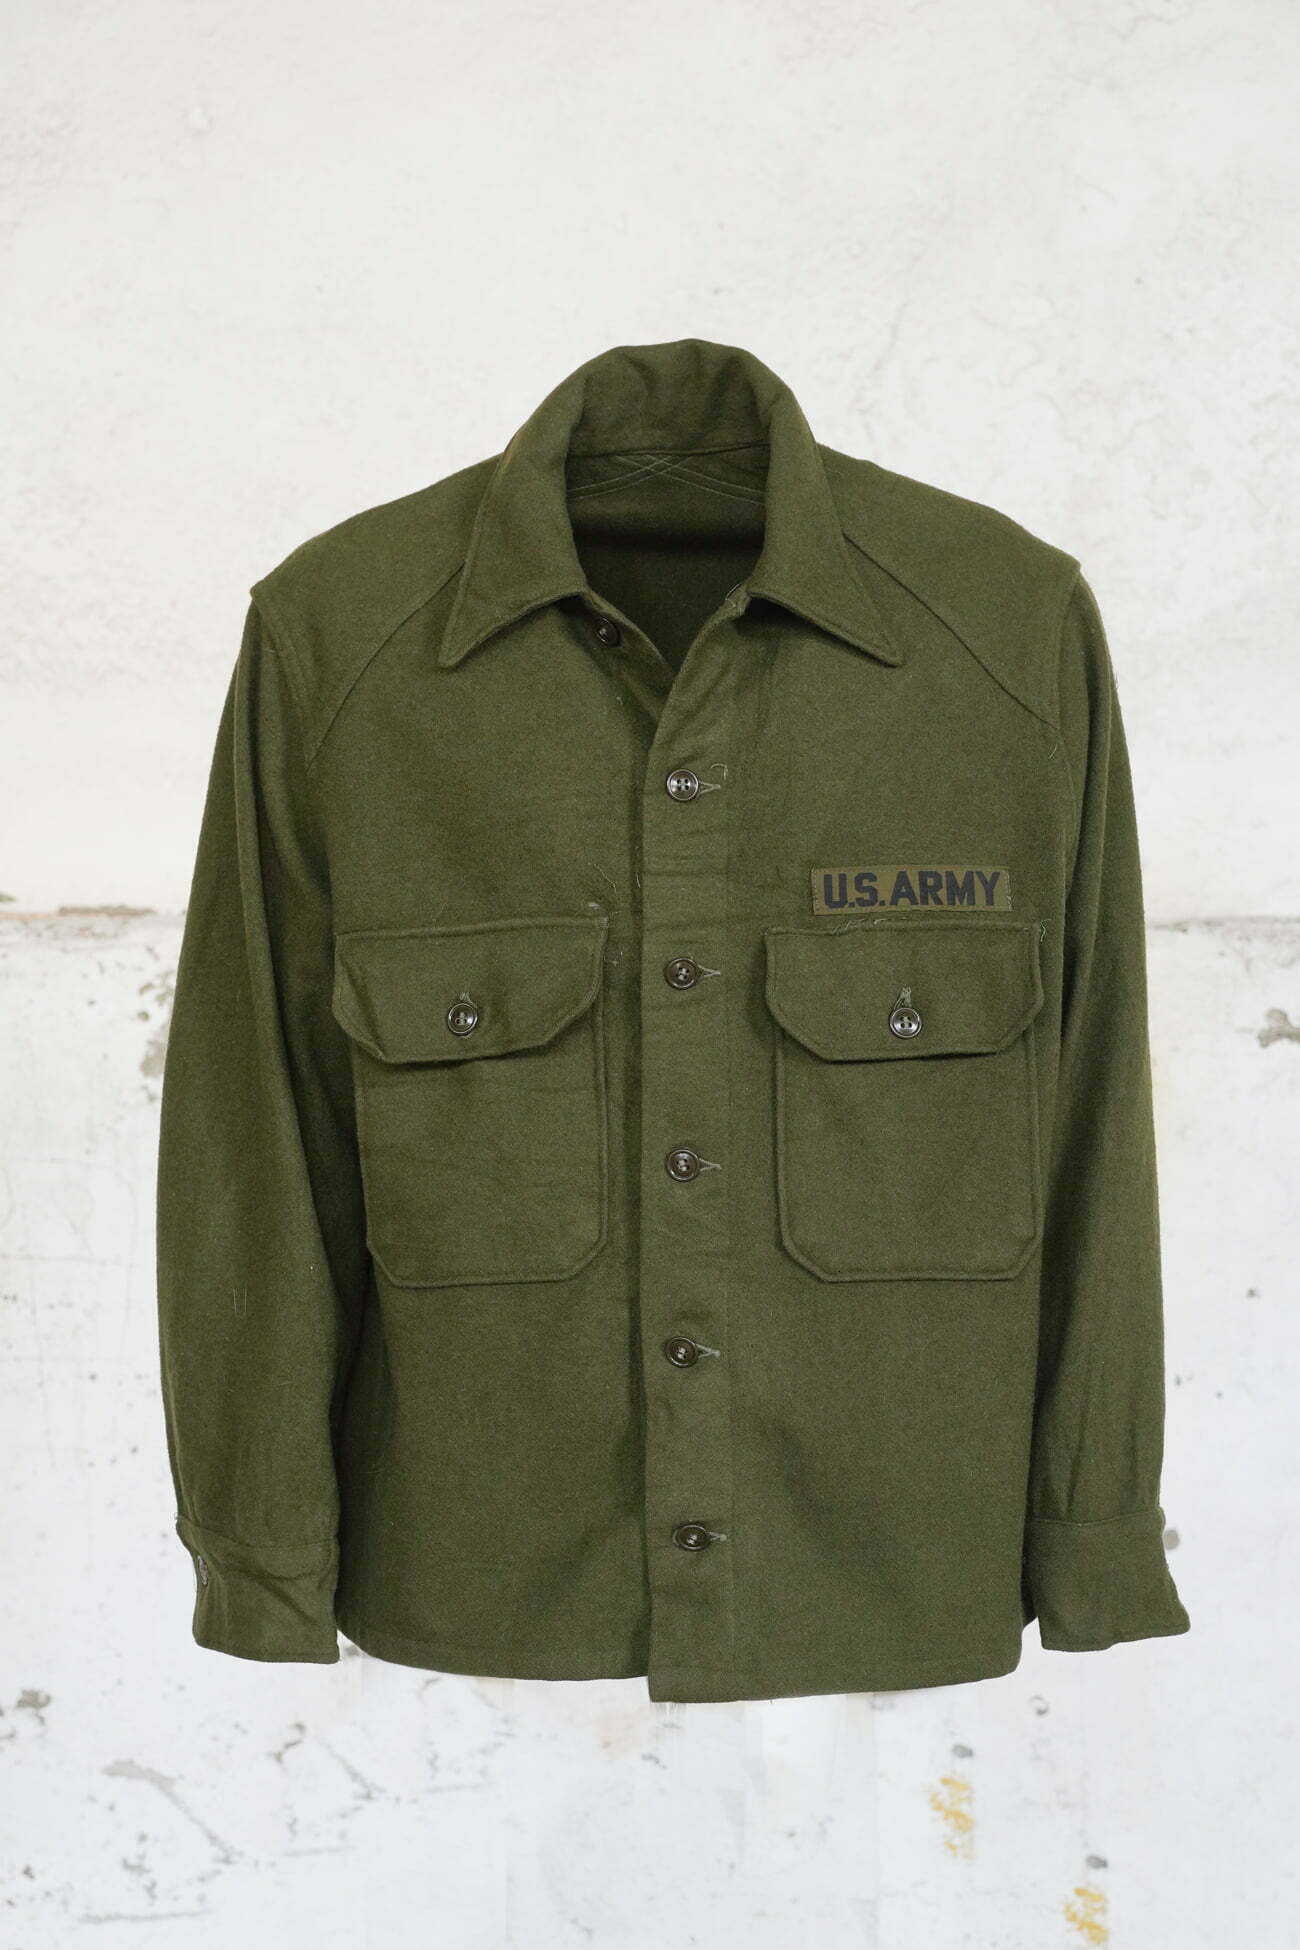 OG-108 Wool Shirt US Army